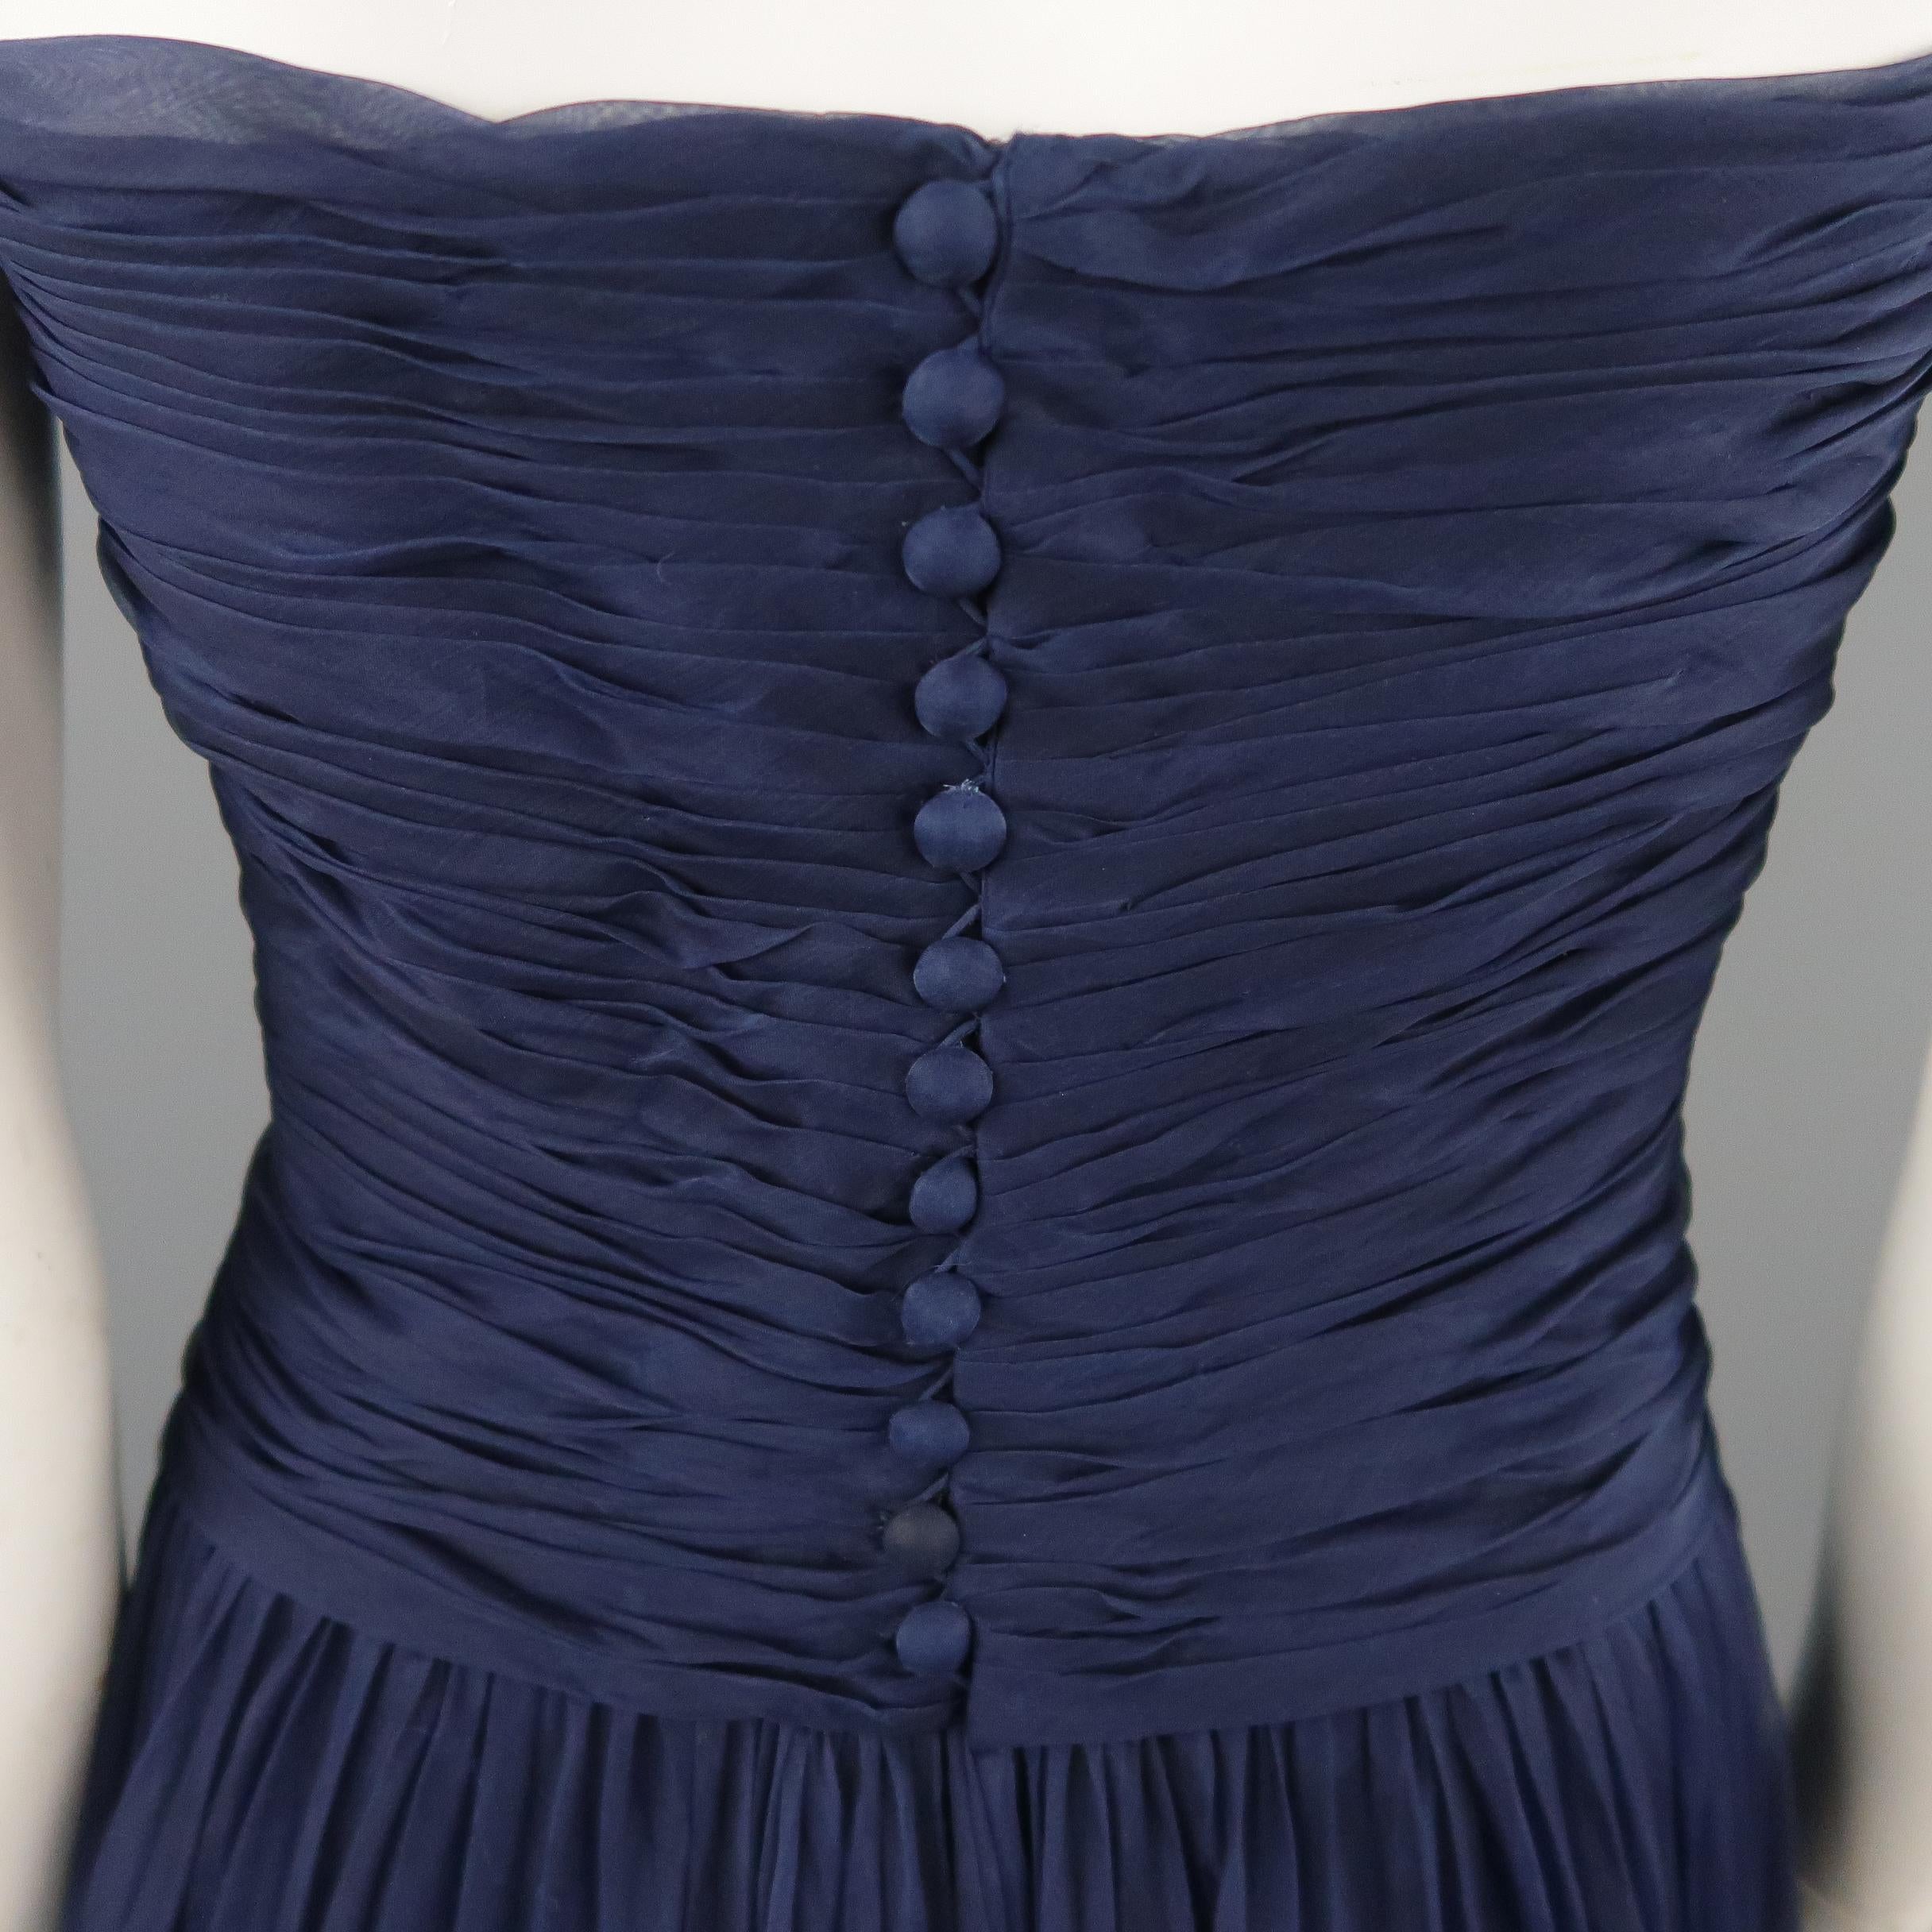 Vintage CHANEL Size US 8 / FR 40 Navy Gathered Silk Strapless Spring 1997 Dress 1